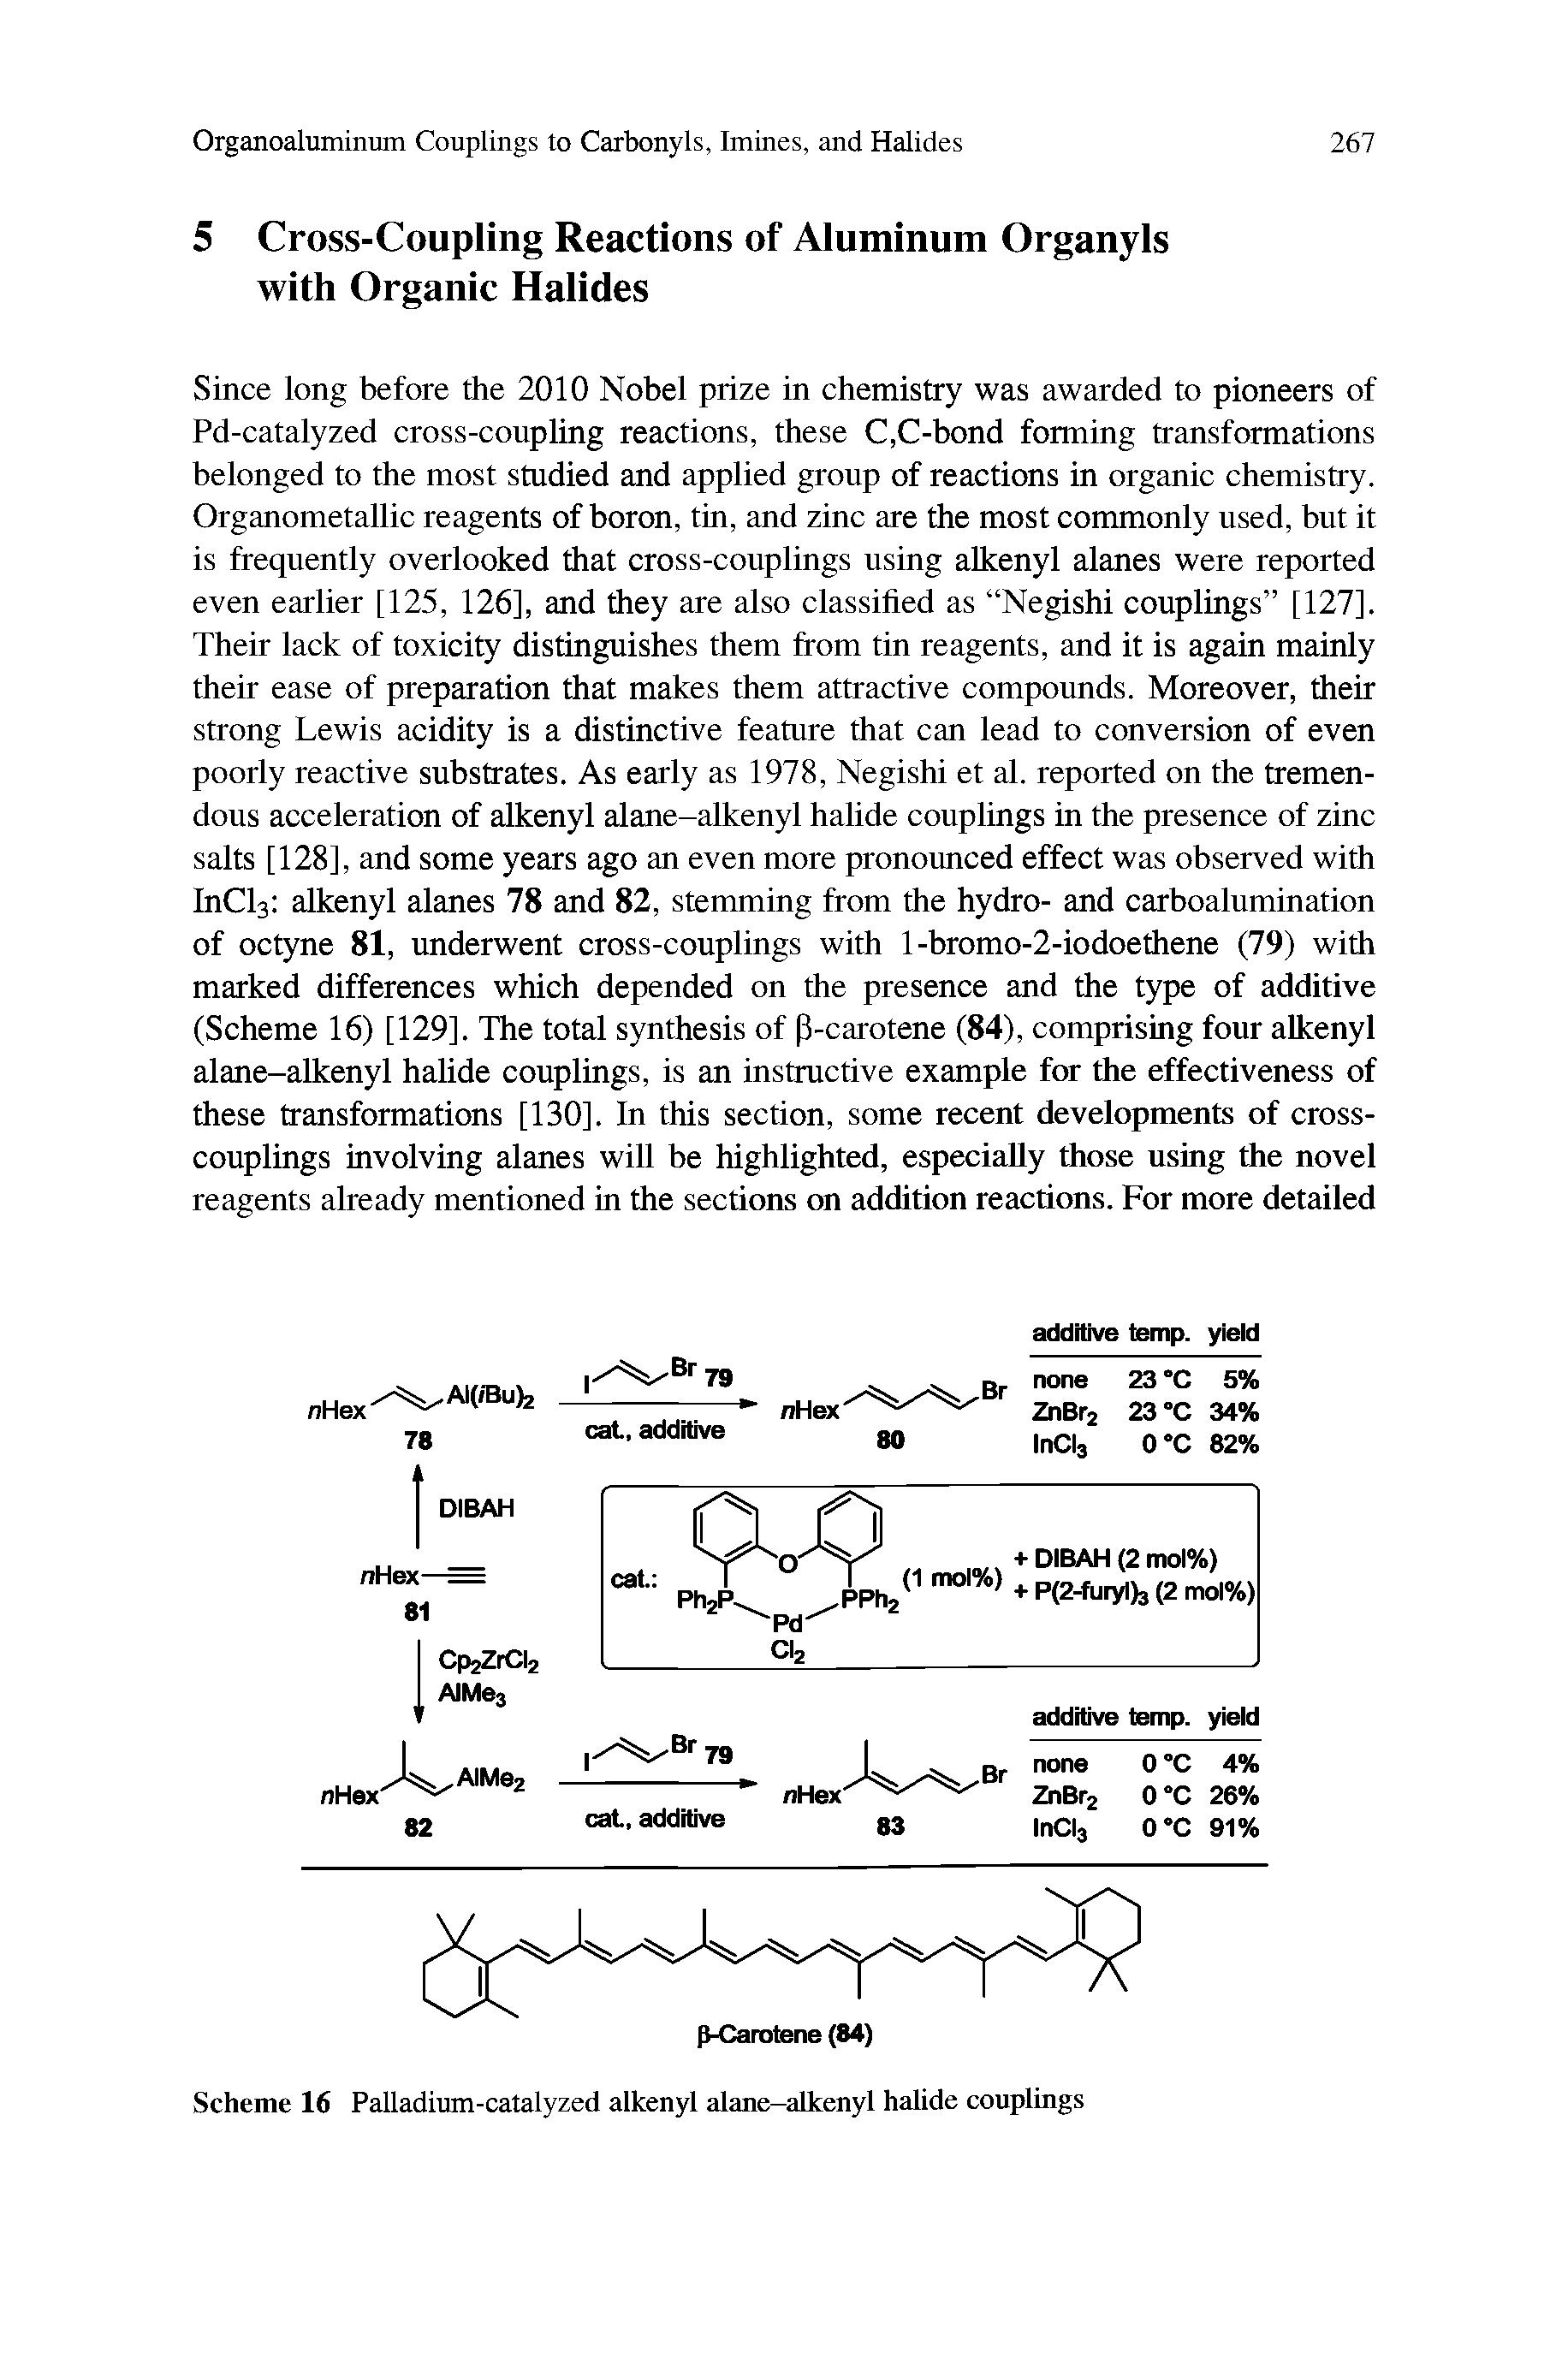 Scheme 16 Palladium-catalyzed alkenyl alane-alkenyl halide couplings...